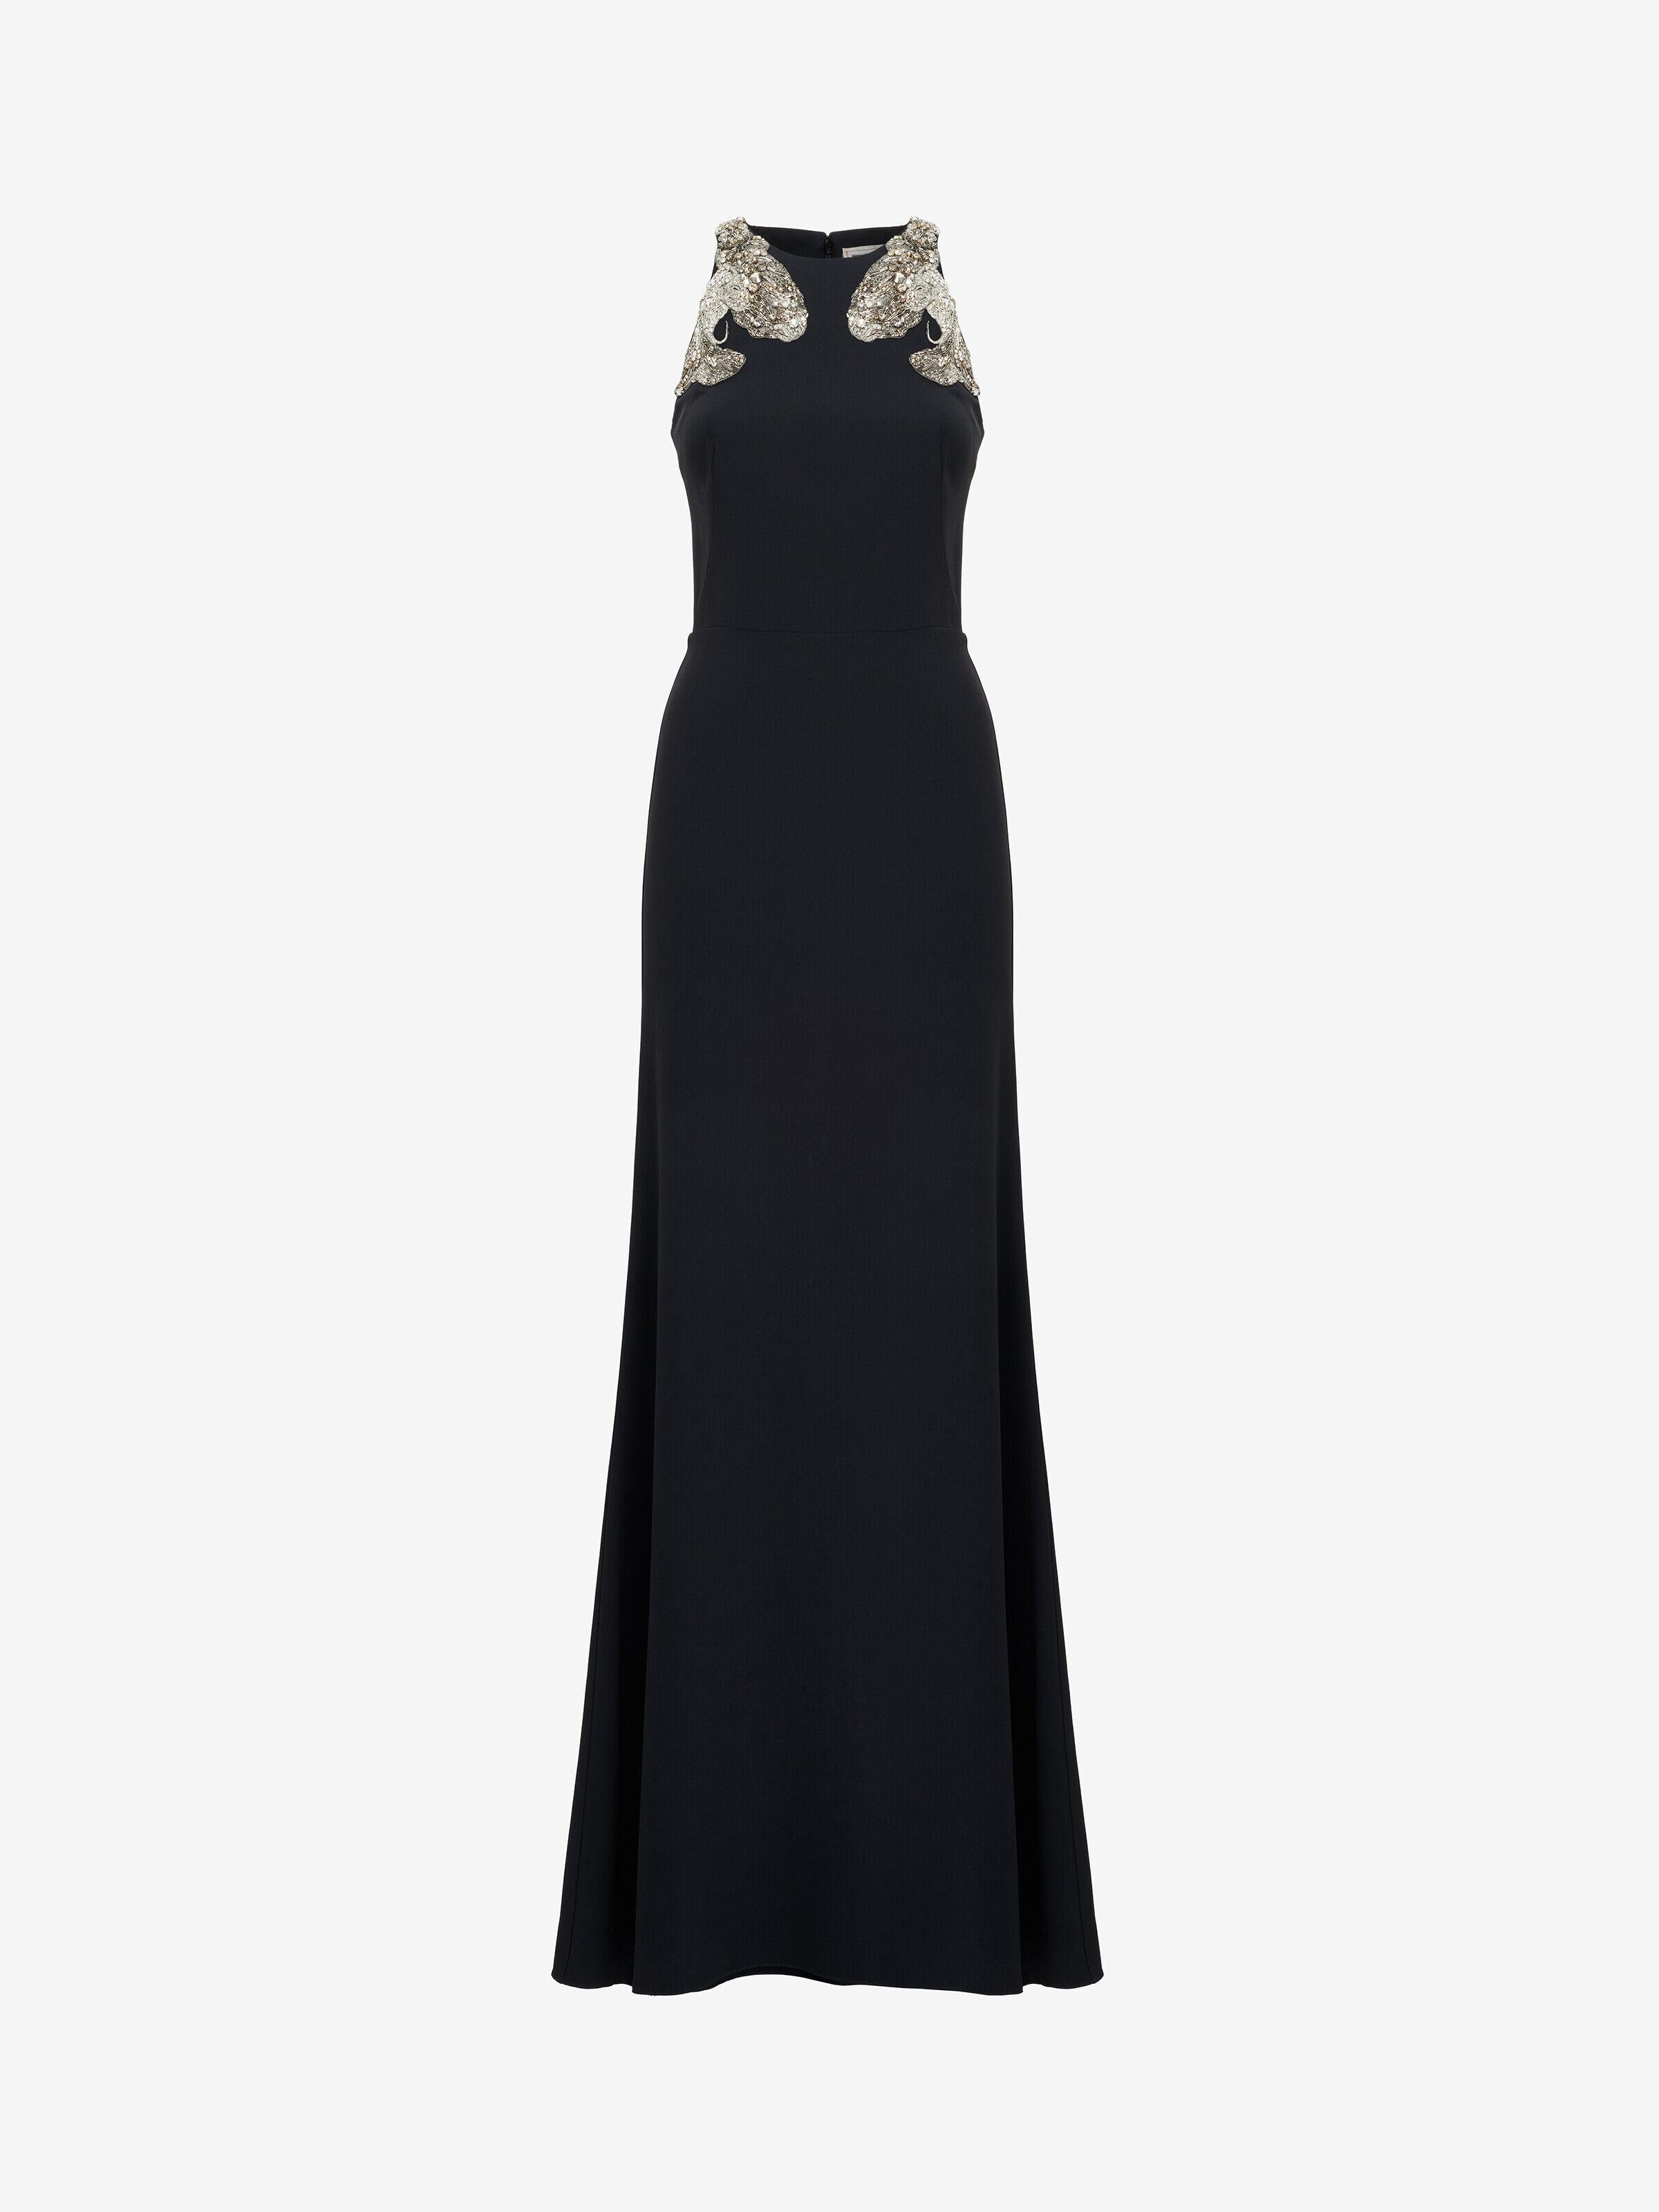 ALEXANDER MCQUEEN Embellished crepe gown | NET-A-PORTER